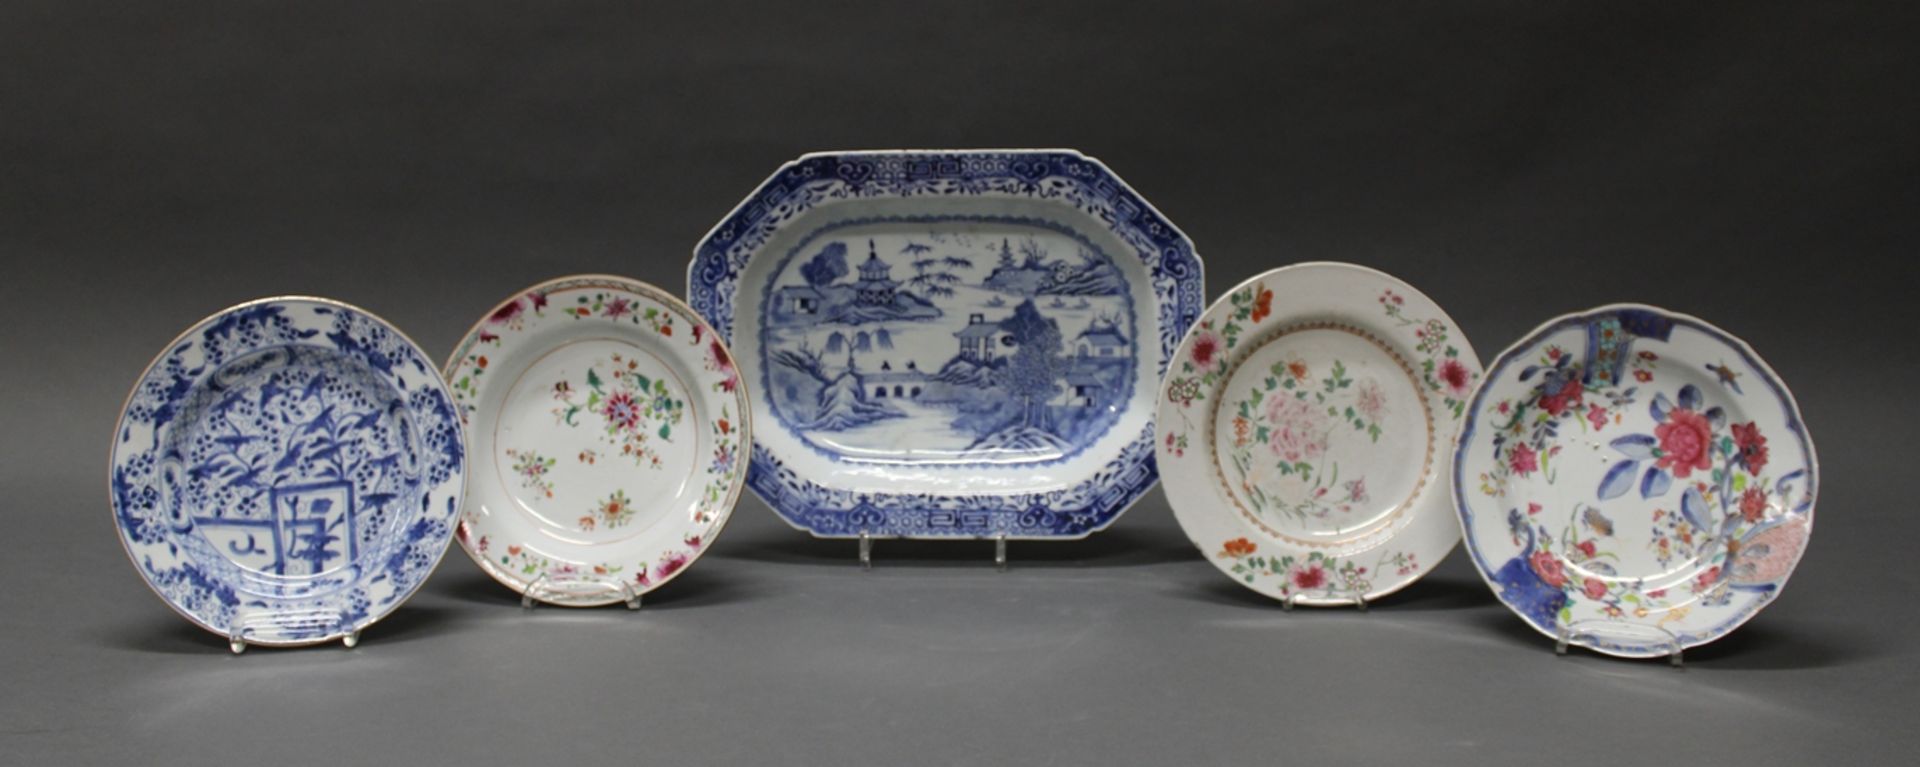 4 Teller, Platte, China, um 1800, verschiedene Ausführungen, 3x famille rose, 2x Blaudekor, oktogon